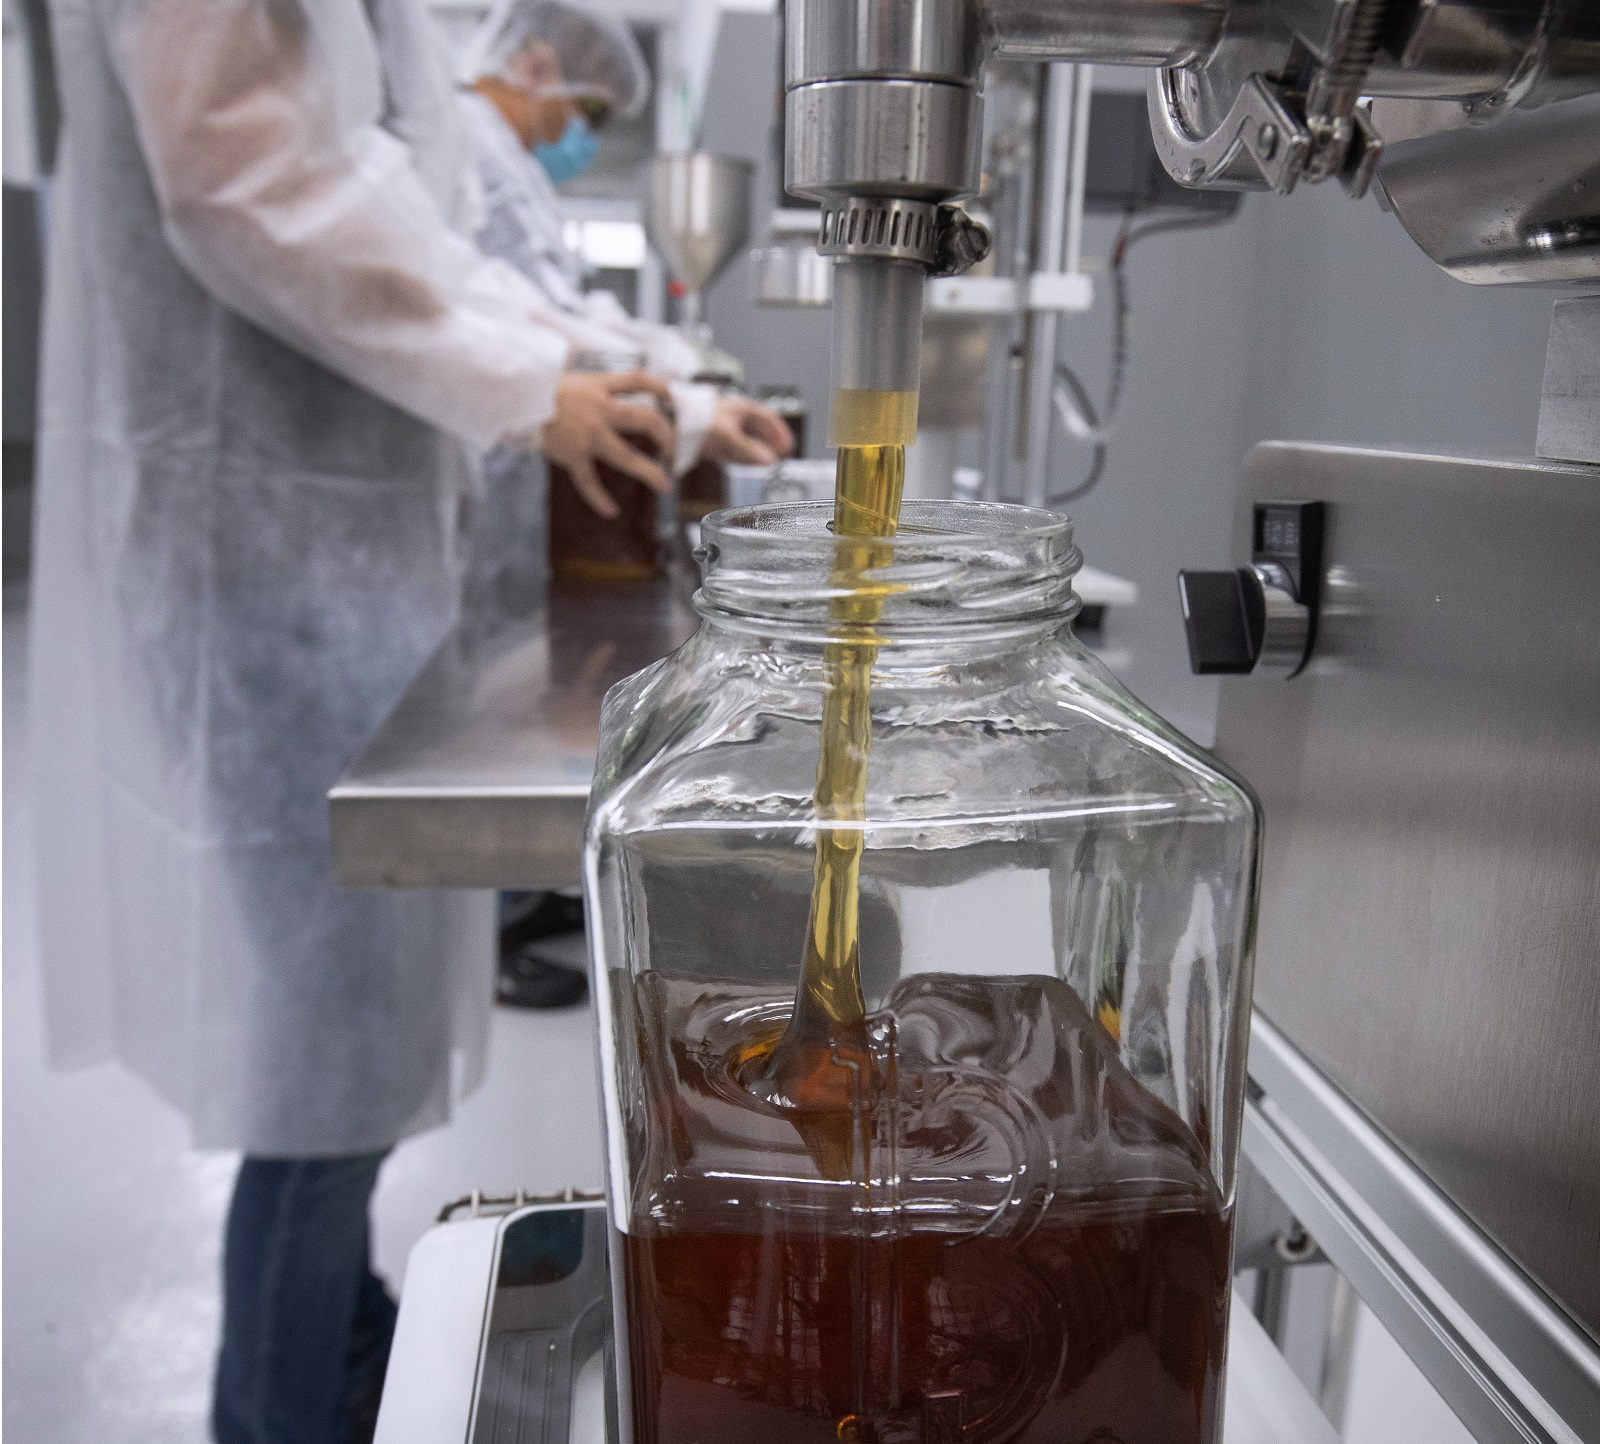 Production of honey